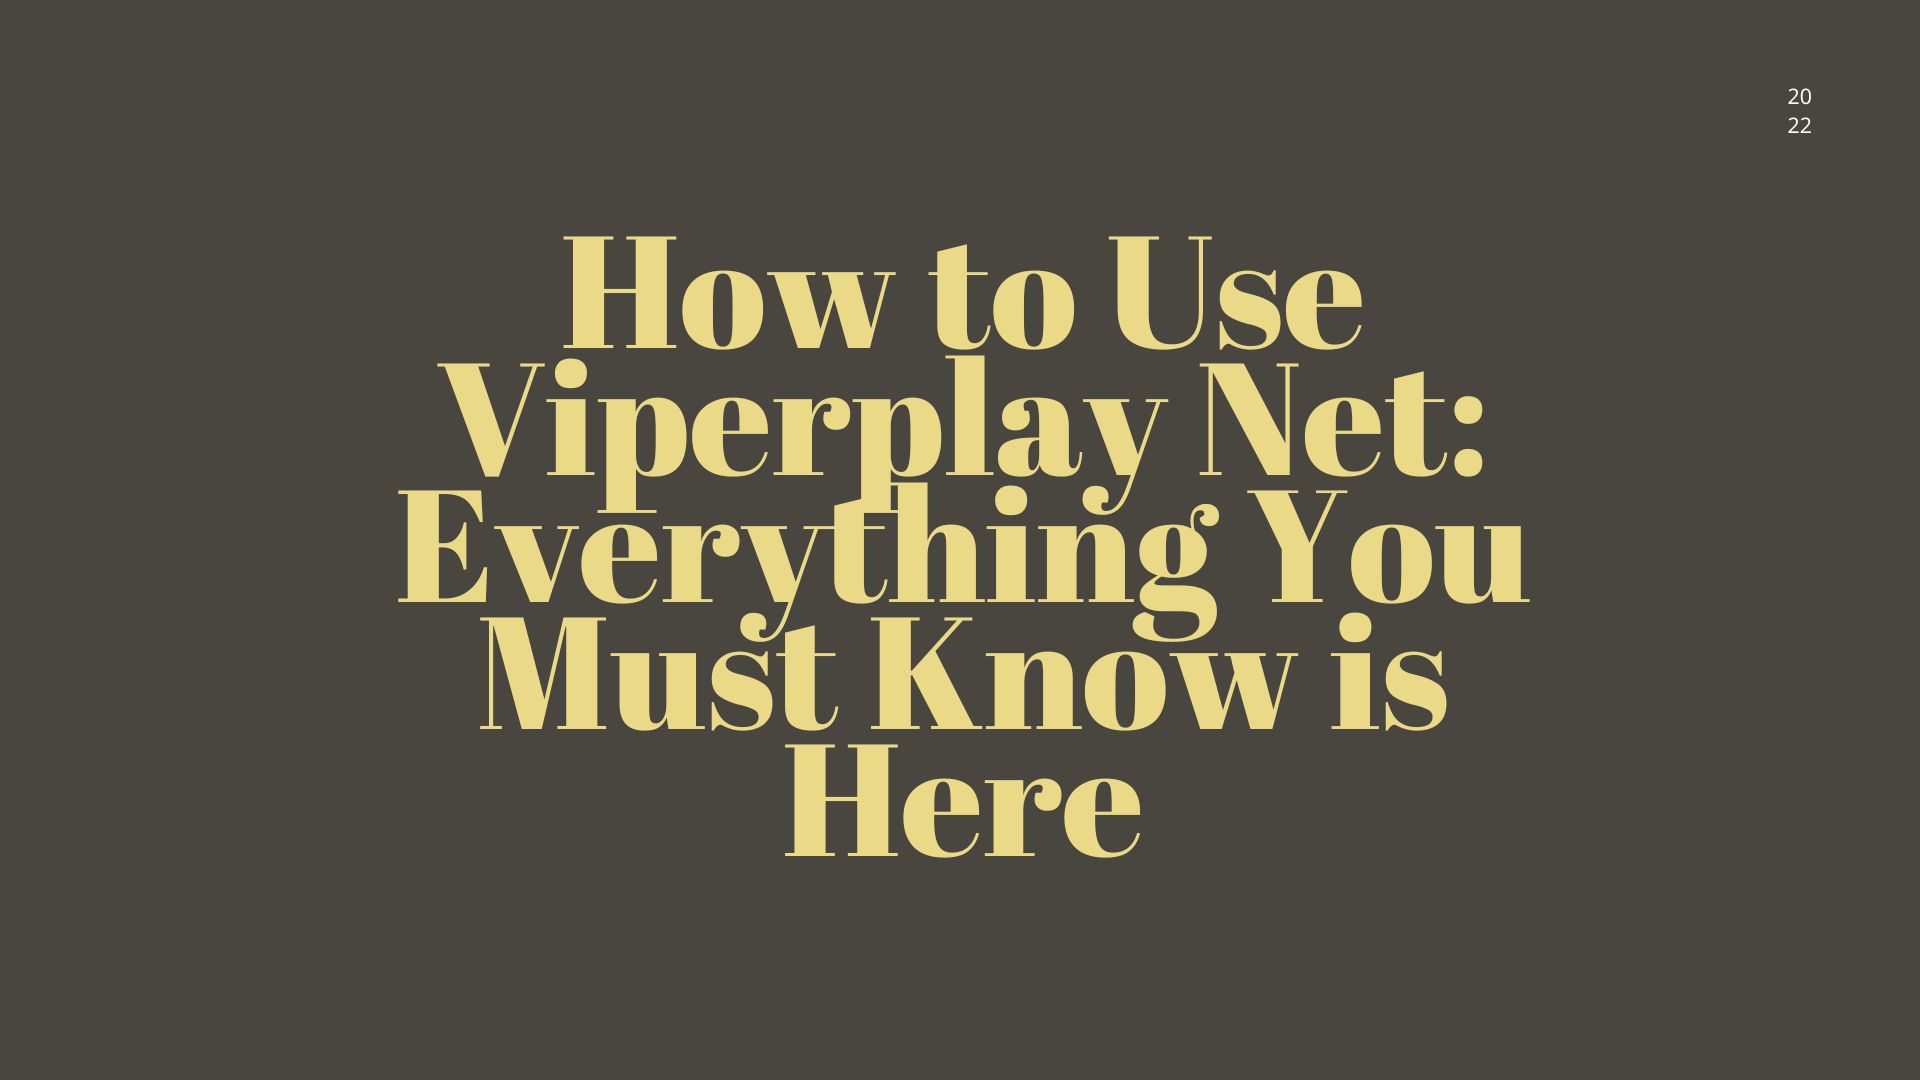 Viperplay net